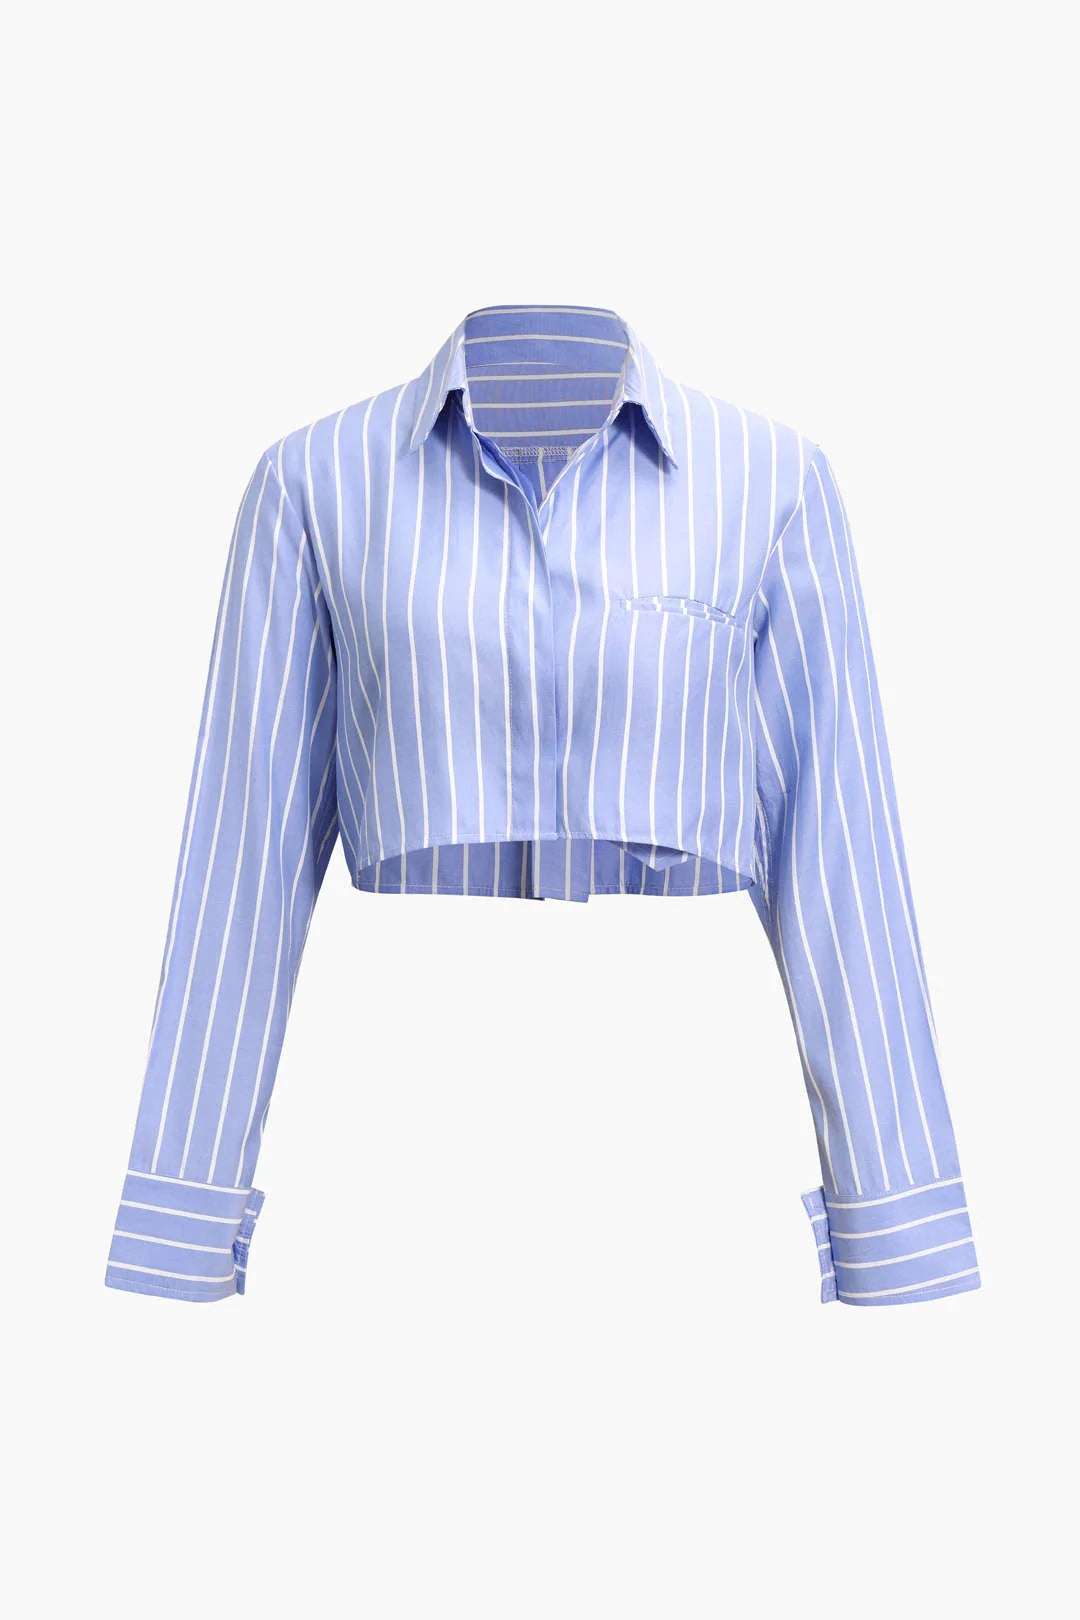 Fashionable short shirts, Stylish lapel shirts, Women's striped shirts - available at Sparq Mart